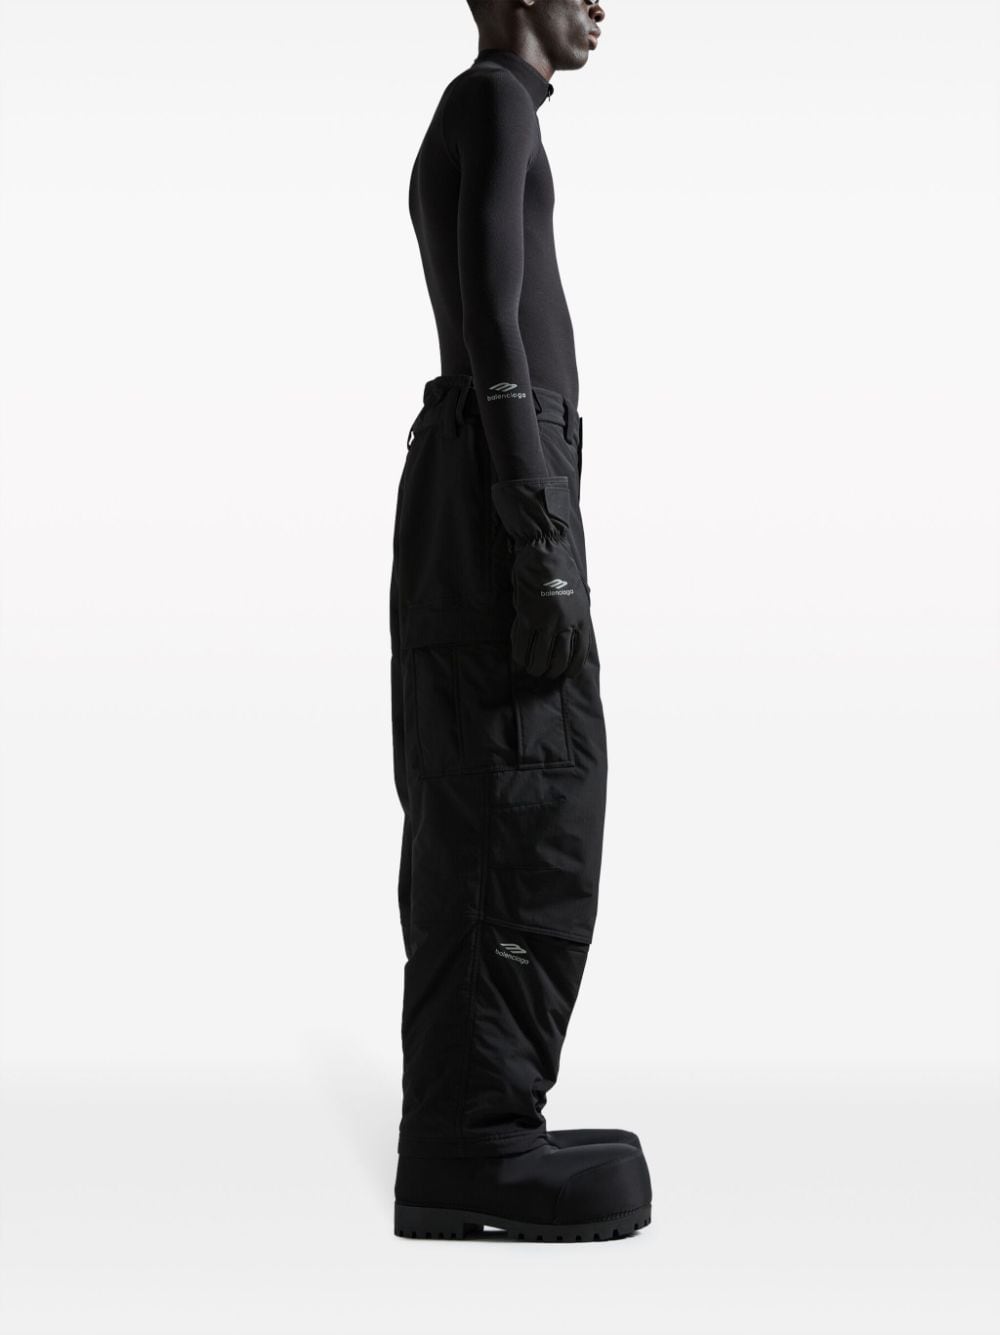 3B Sports Icon cargo ski trousers<BR/><BR/><BR/>